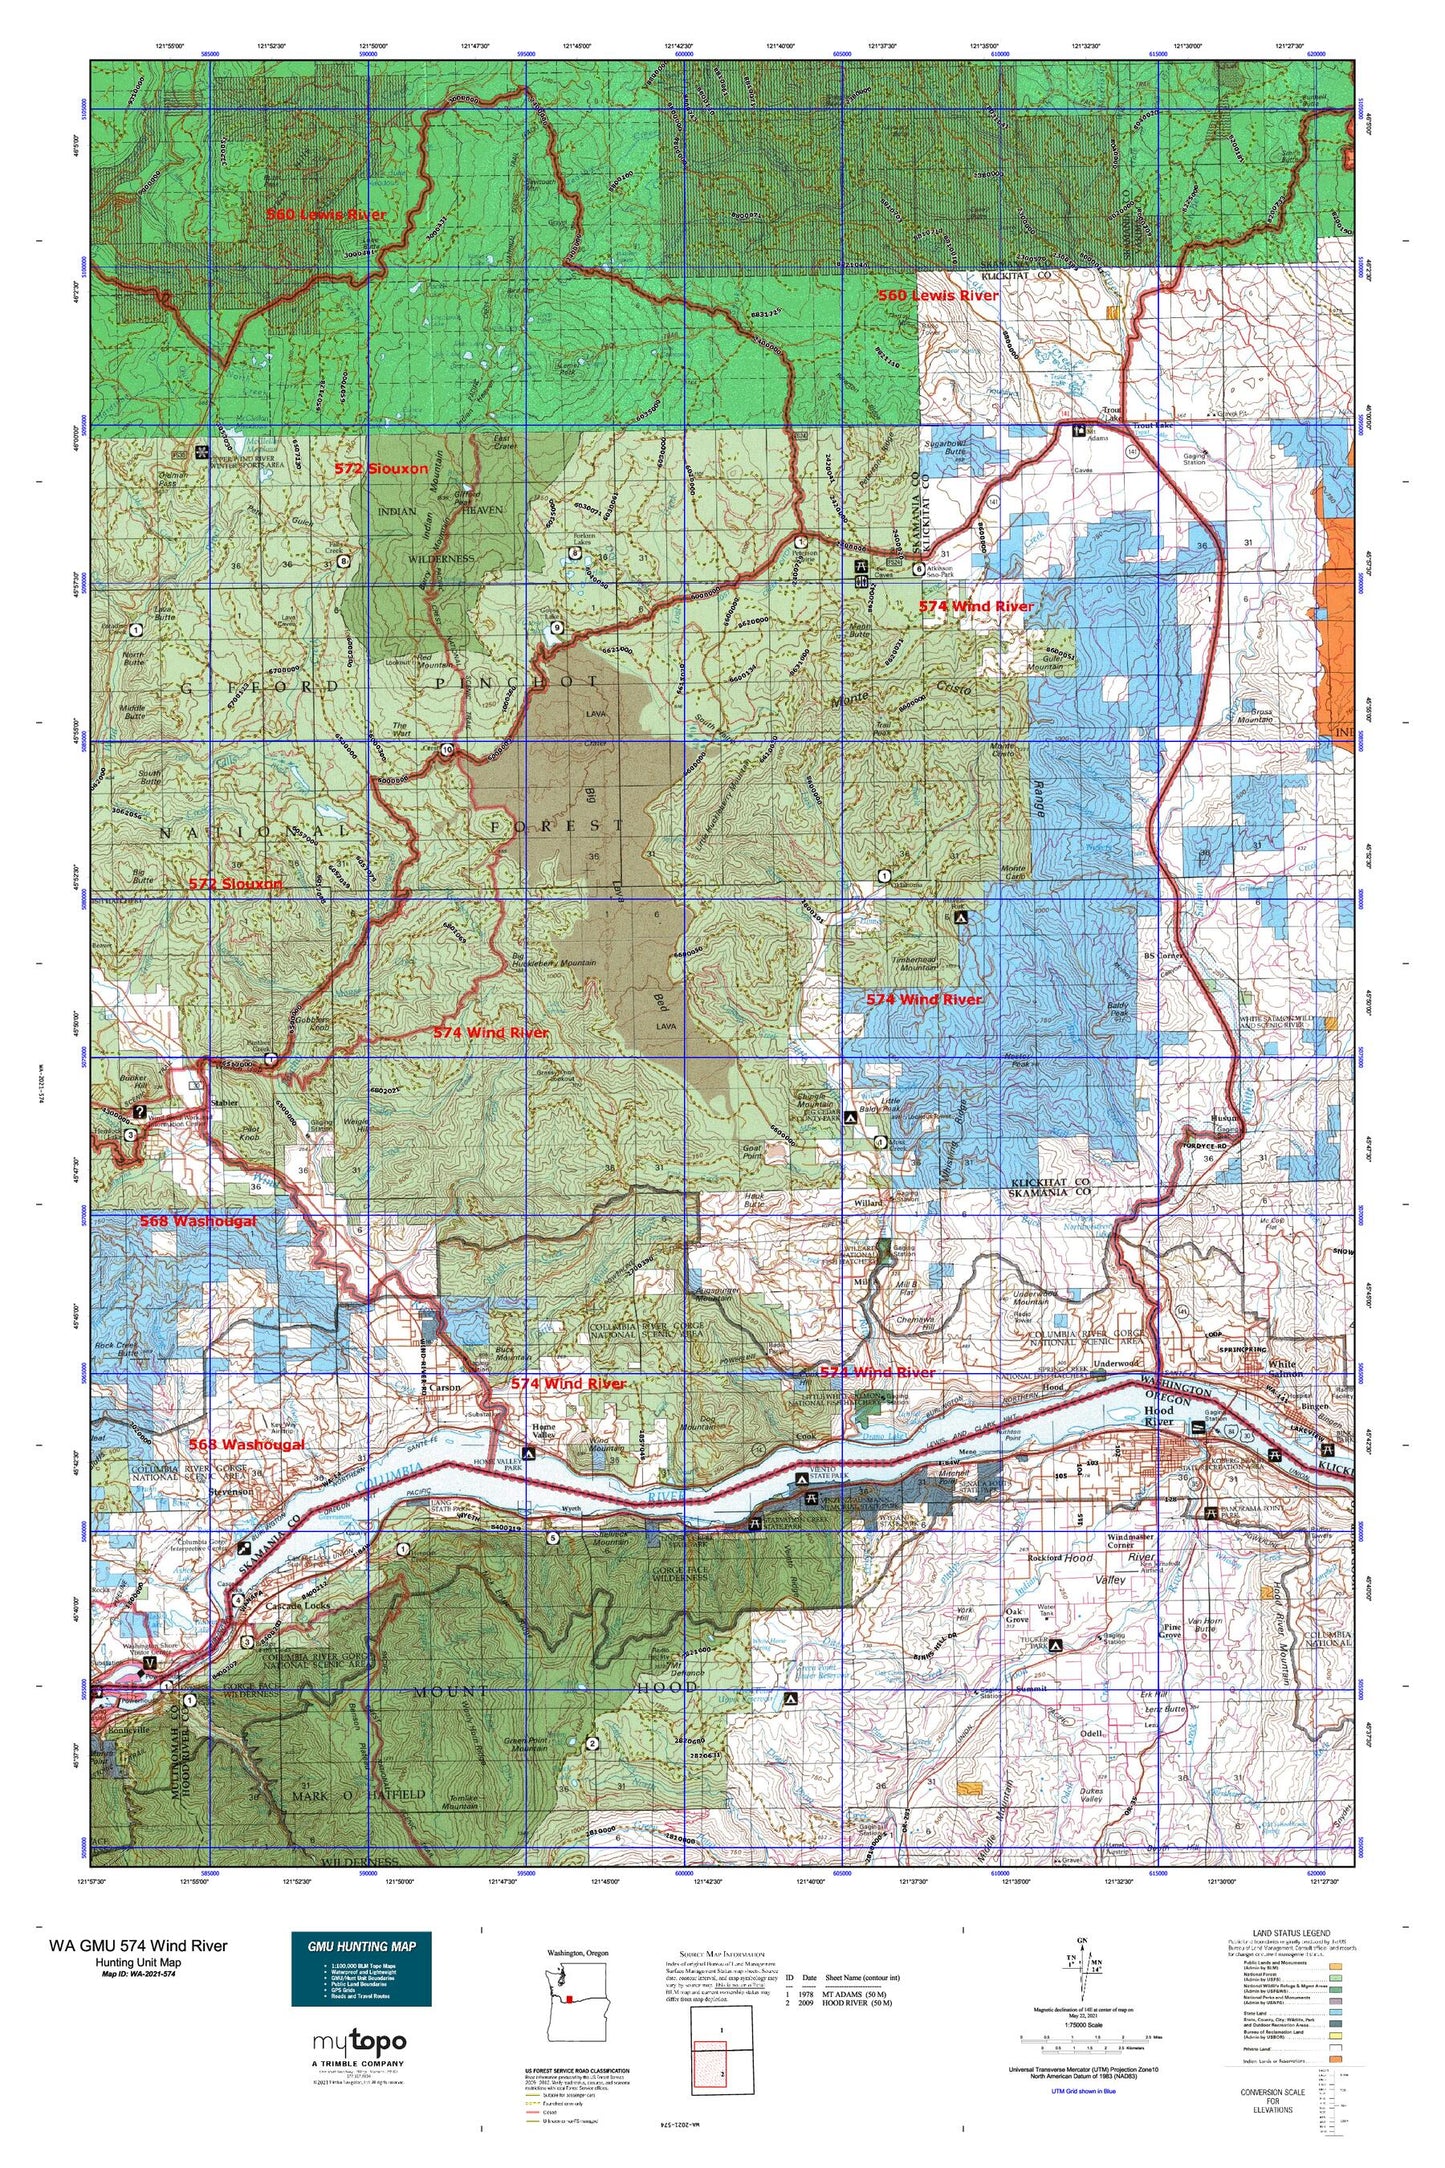 Washington GMU 574 Wind River Map Image